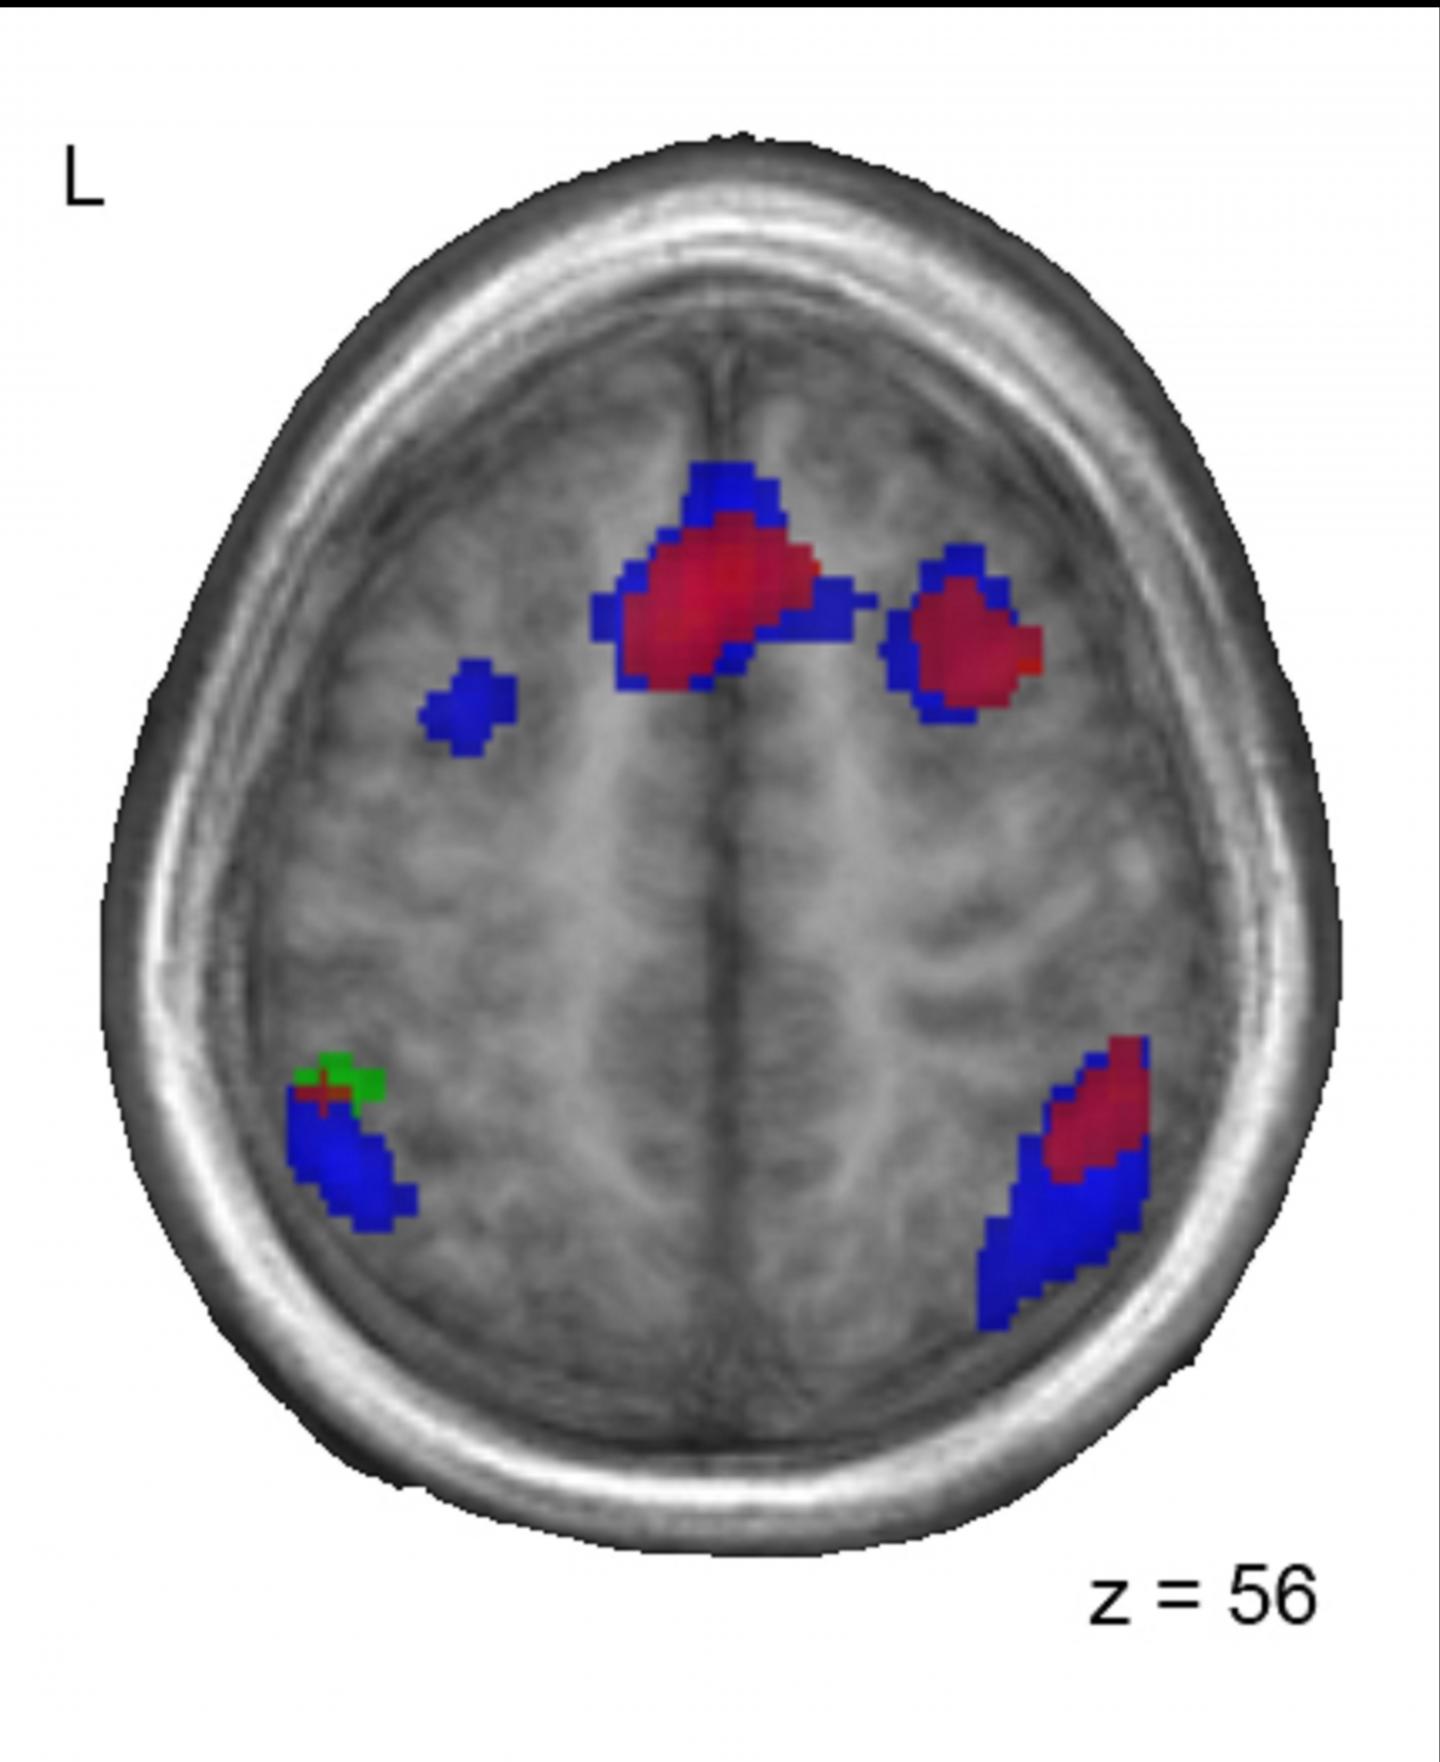 Similarity in Brain Activation